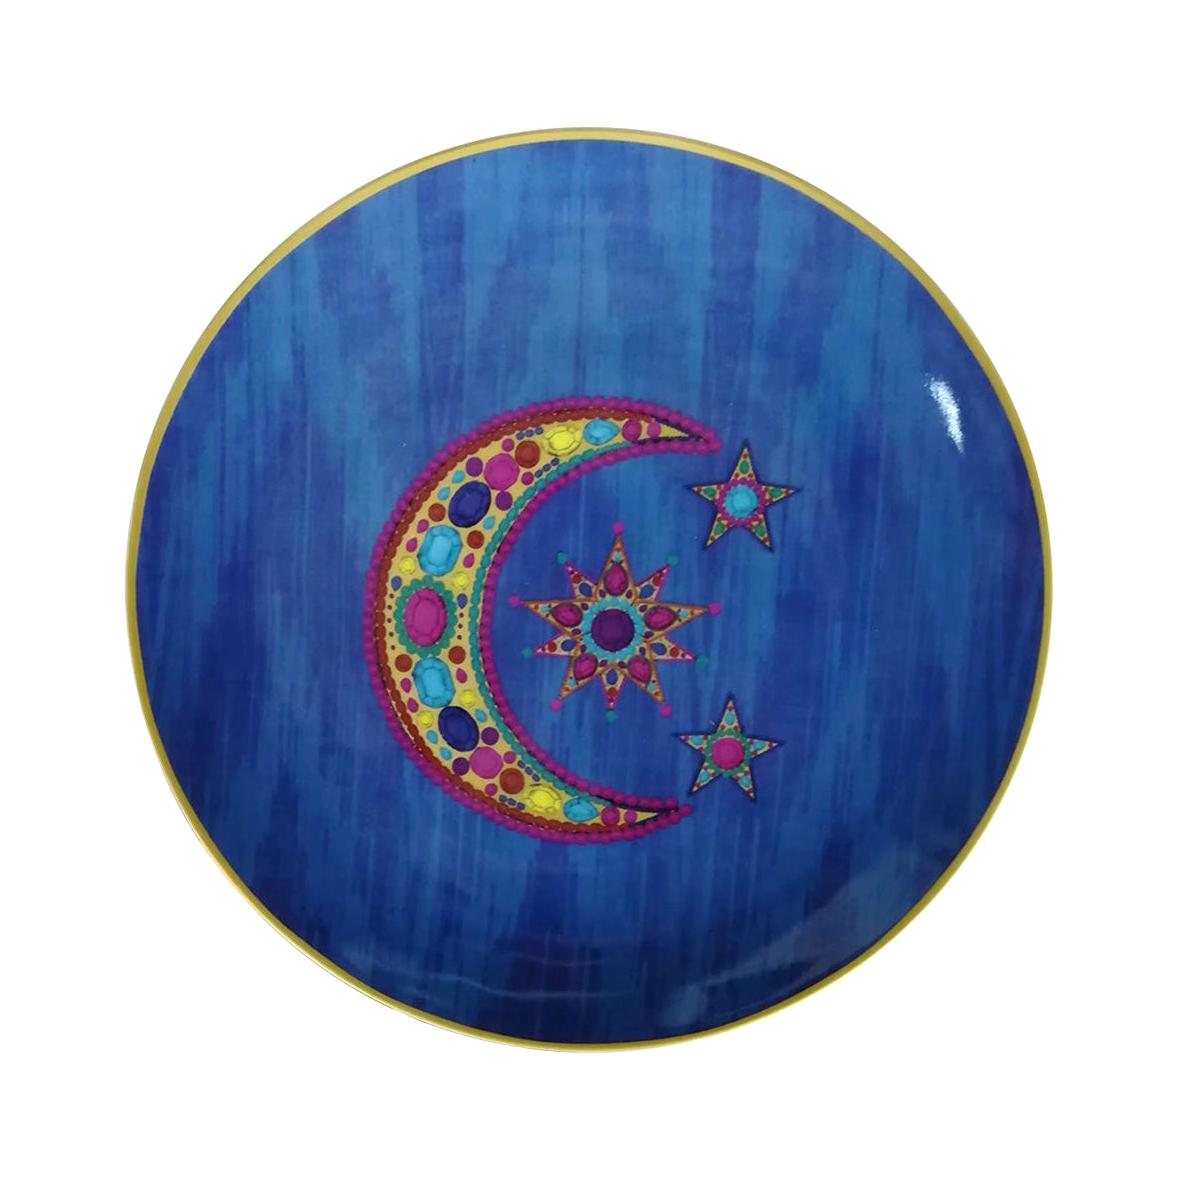 Les Ottomans "The Moon Design" Large Porcelain Plate by Matthew Williamson